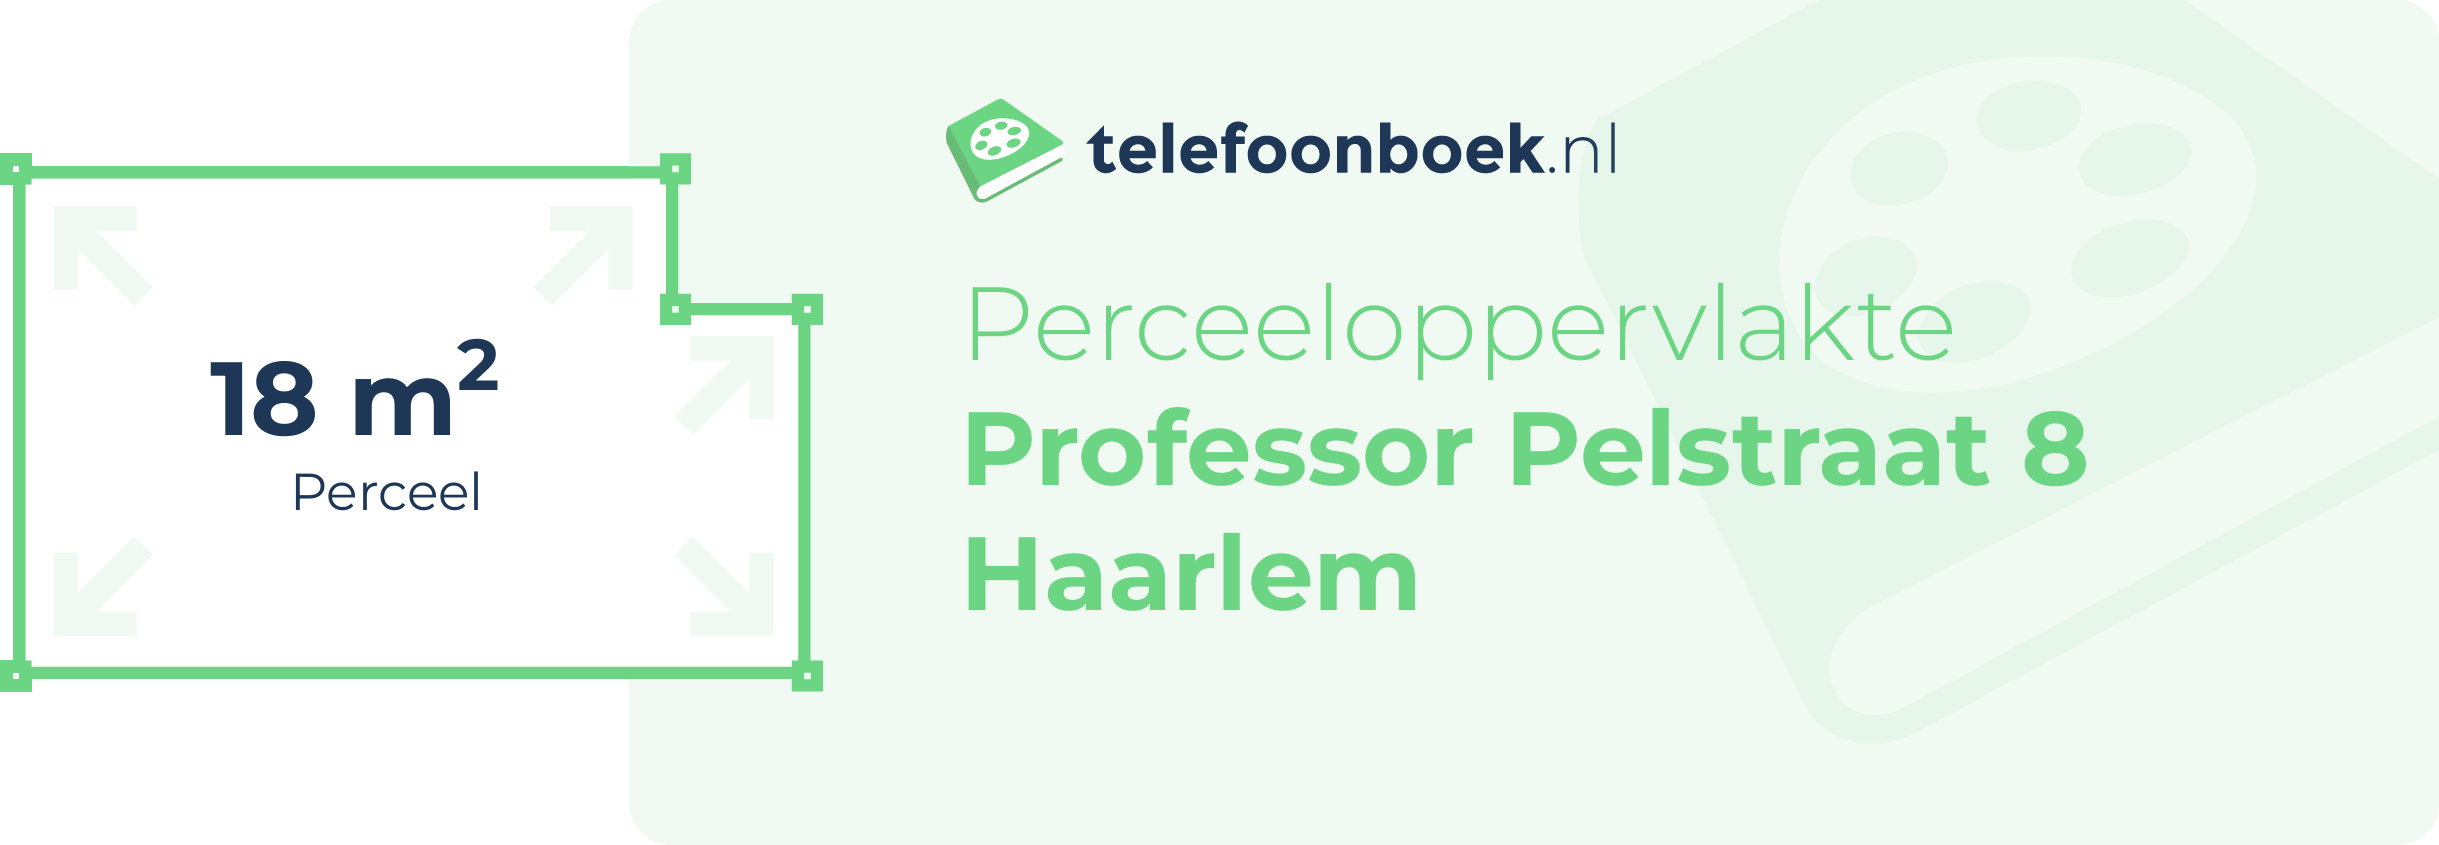 Perceeloppervlakte Professor Pelstraat 8 Haarlem